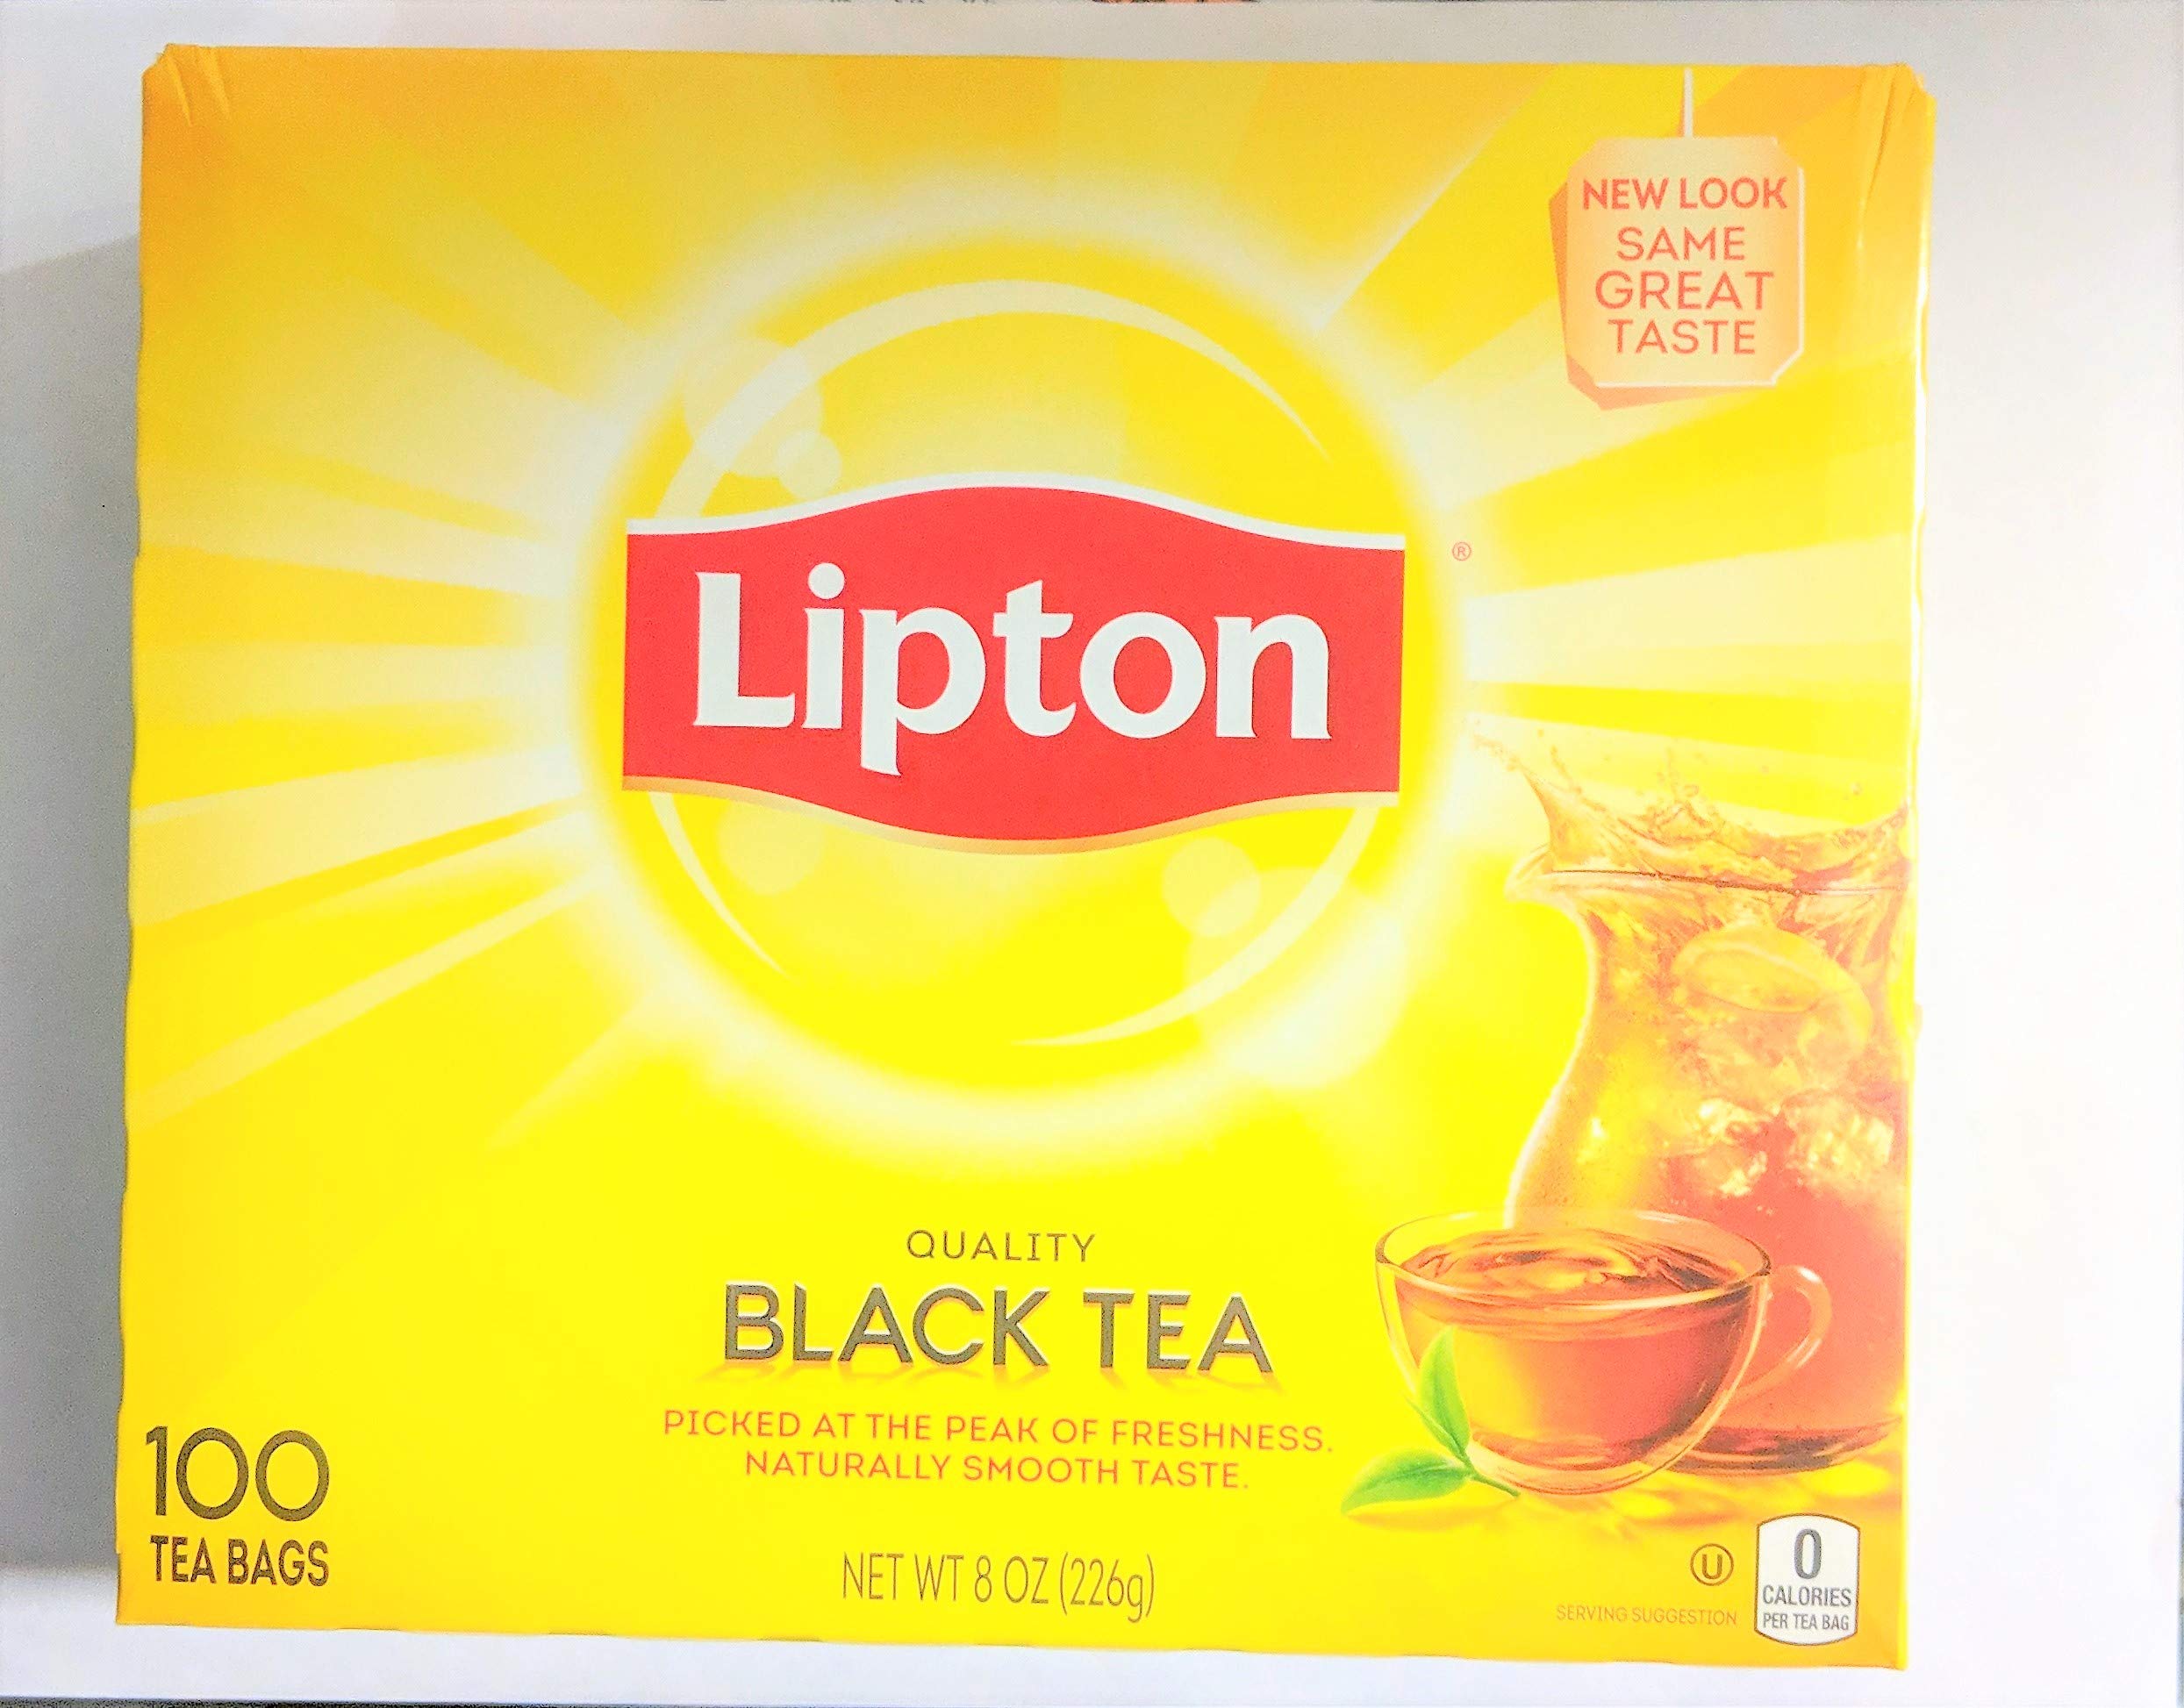 Lipton: The World’s Popular Tea Brand